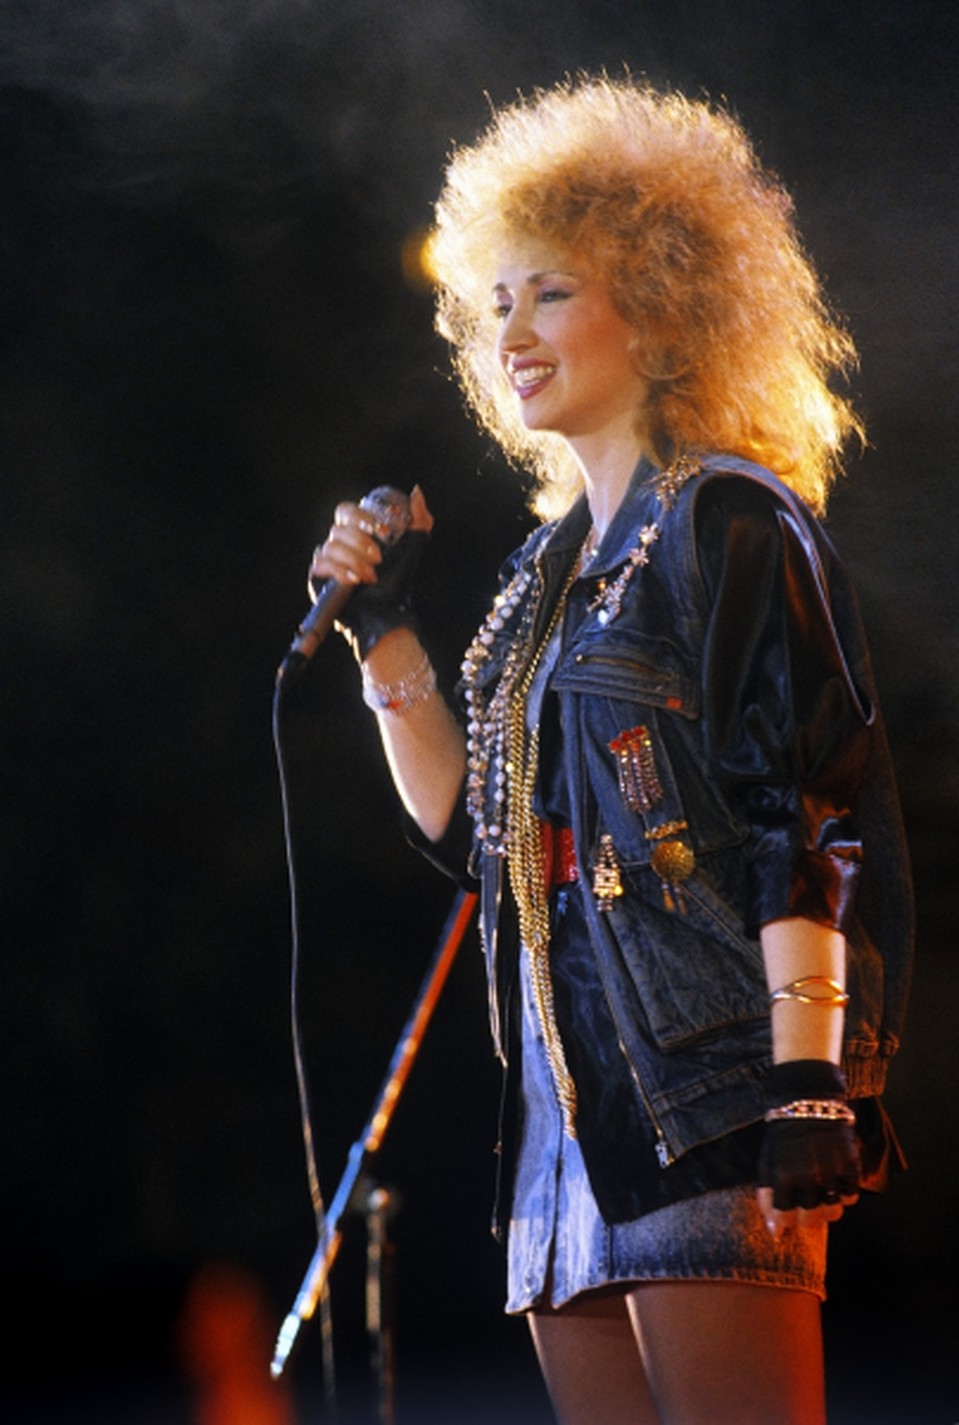 Ирина Аллегрова (фото 1988 год) - одна из законодательниц мод конца 80-х, начала 90-х. Фото: РИА Новости